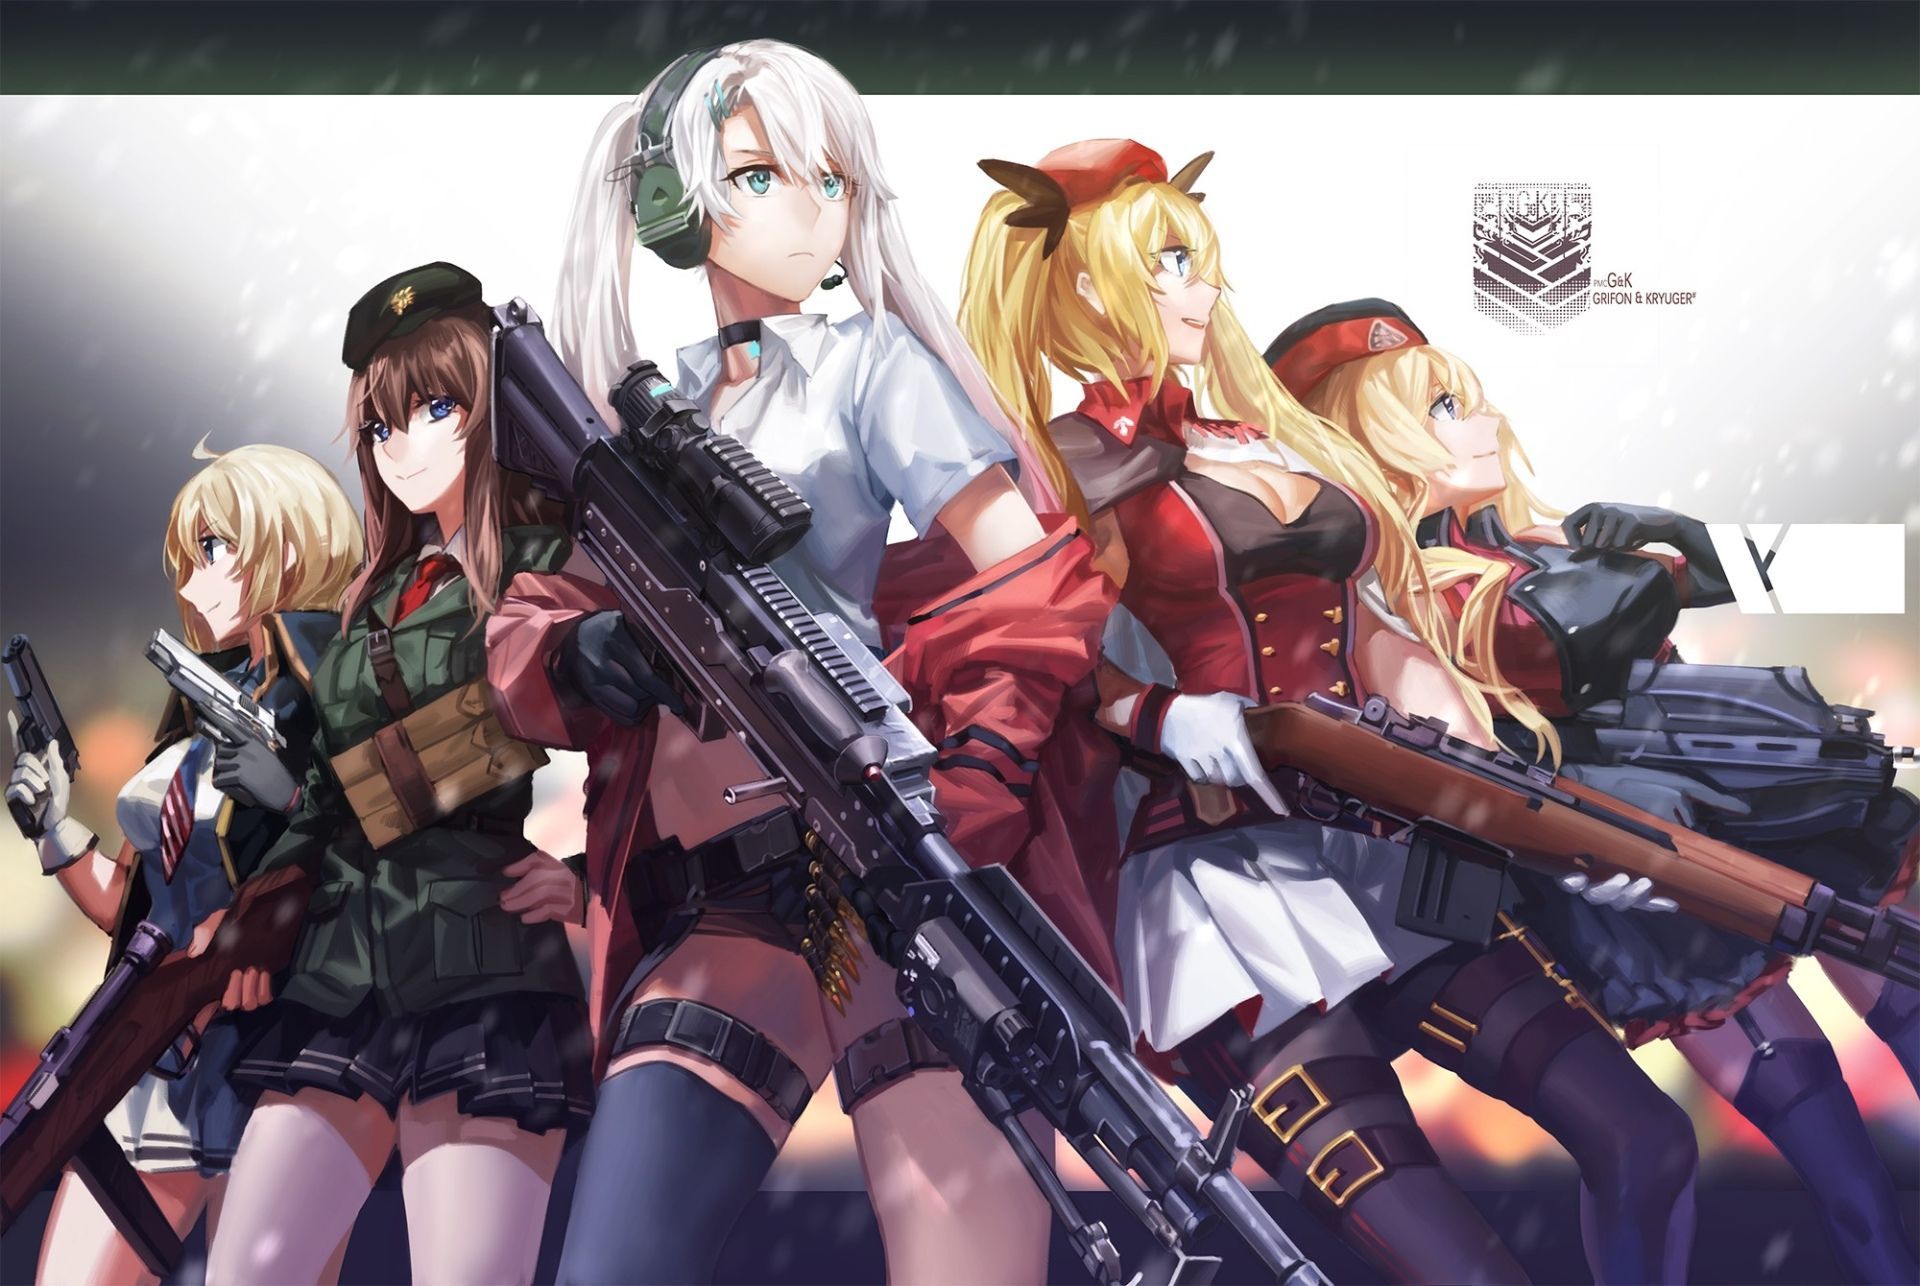 Anime Super guns team by Hrdcoreartist on DeviantArt